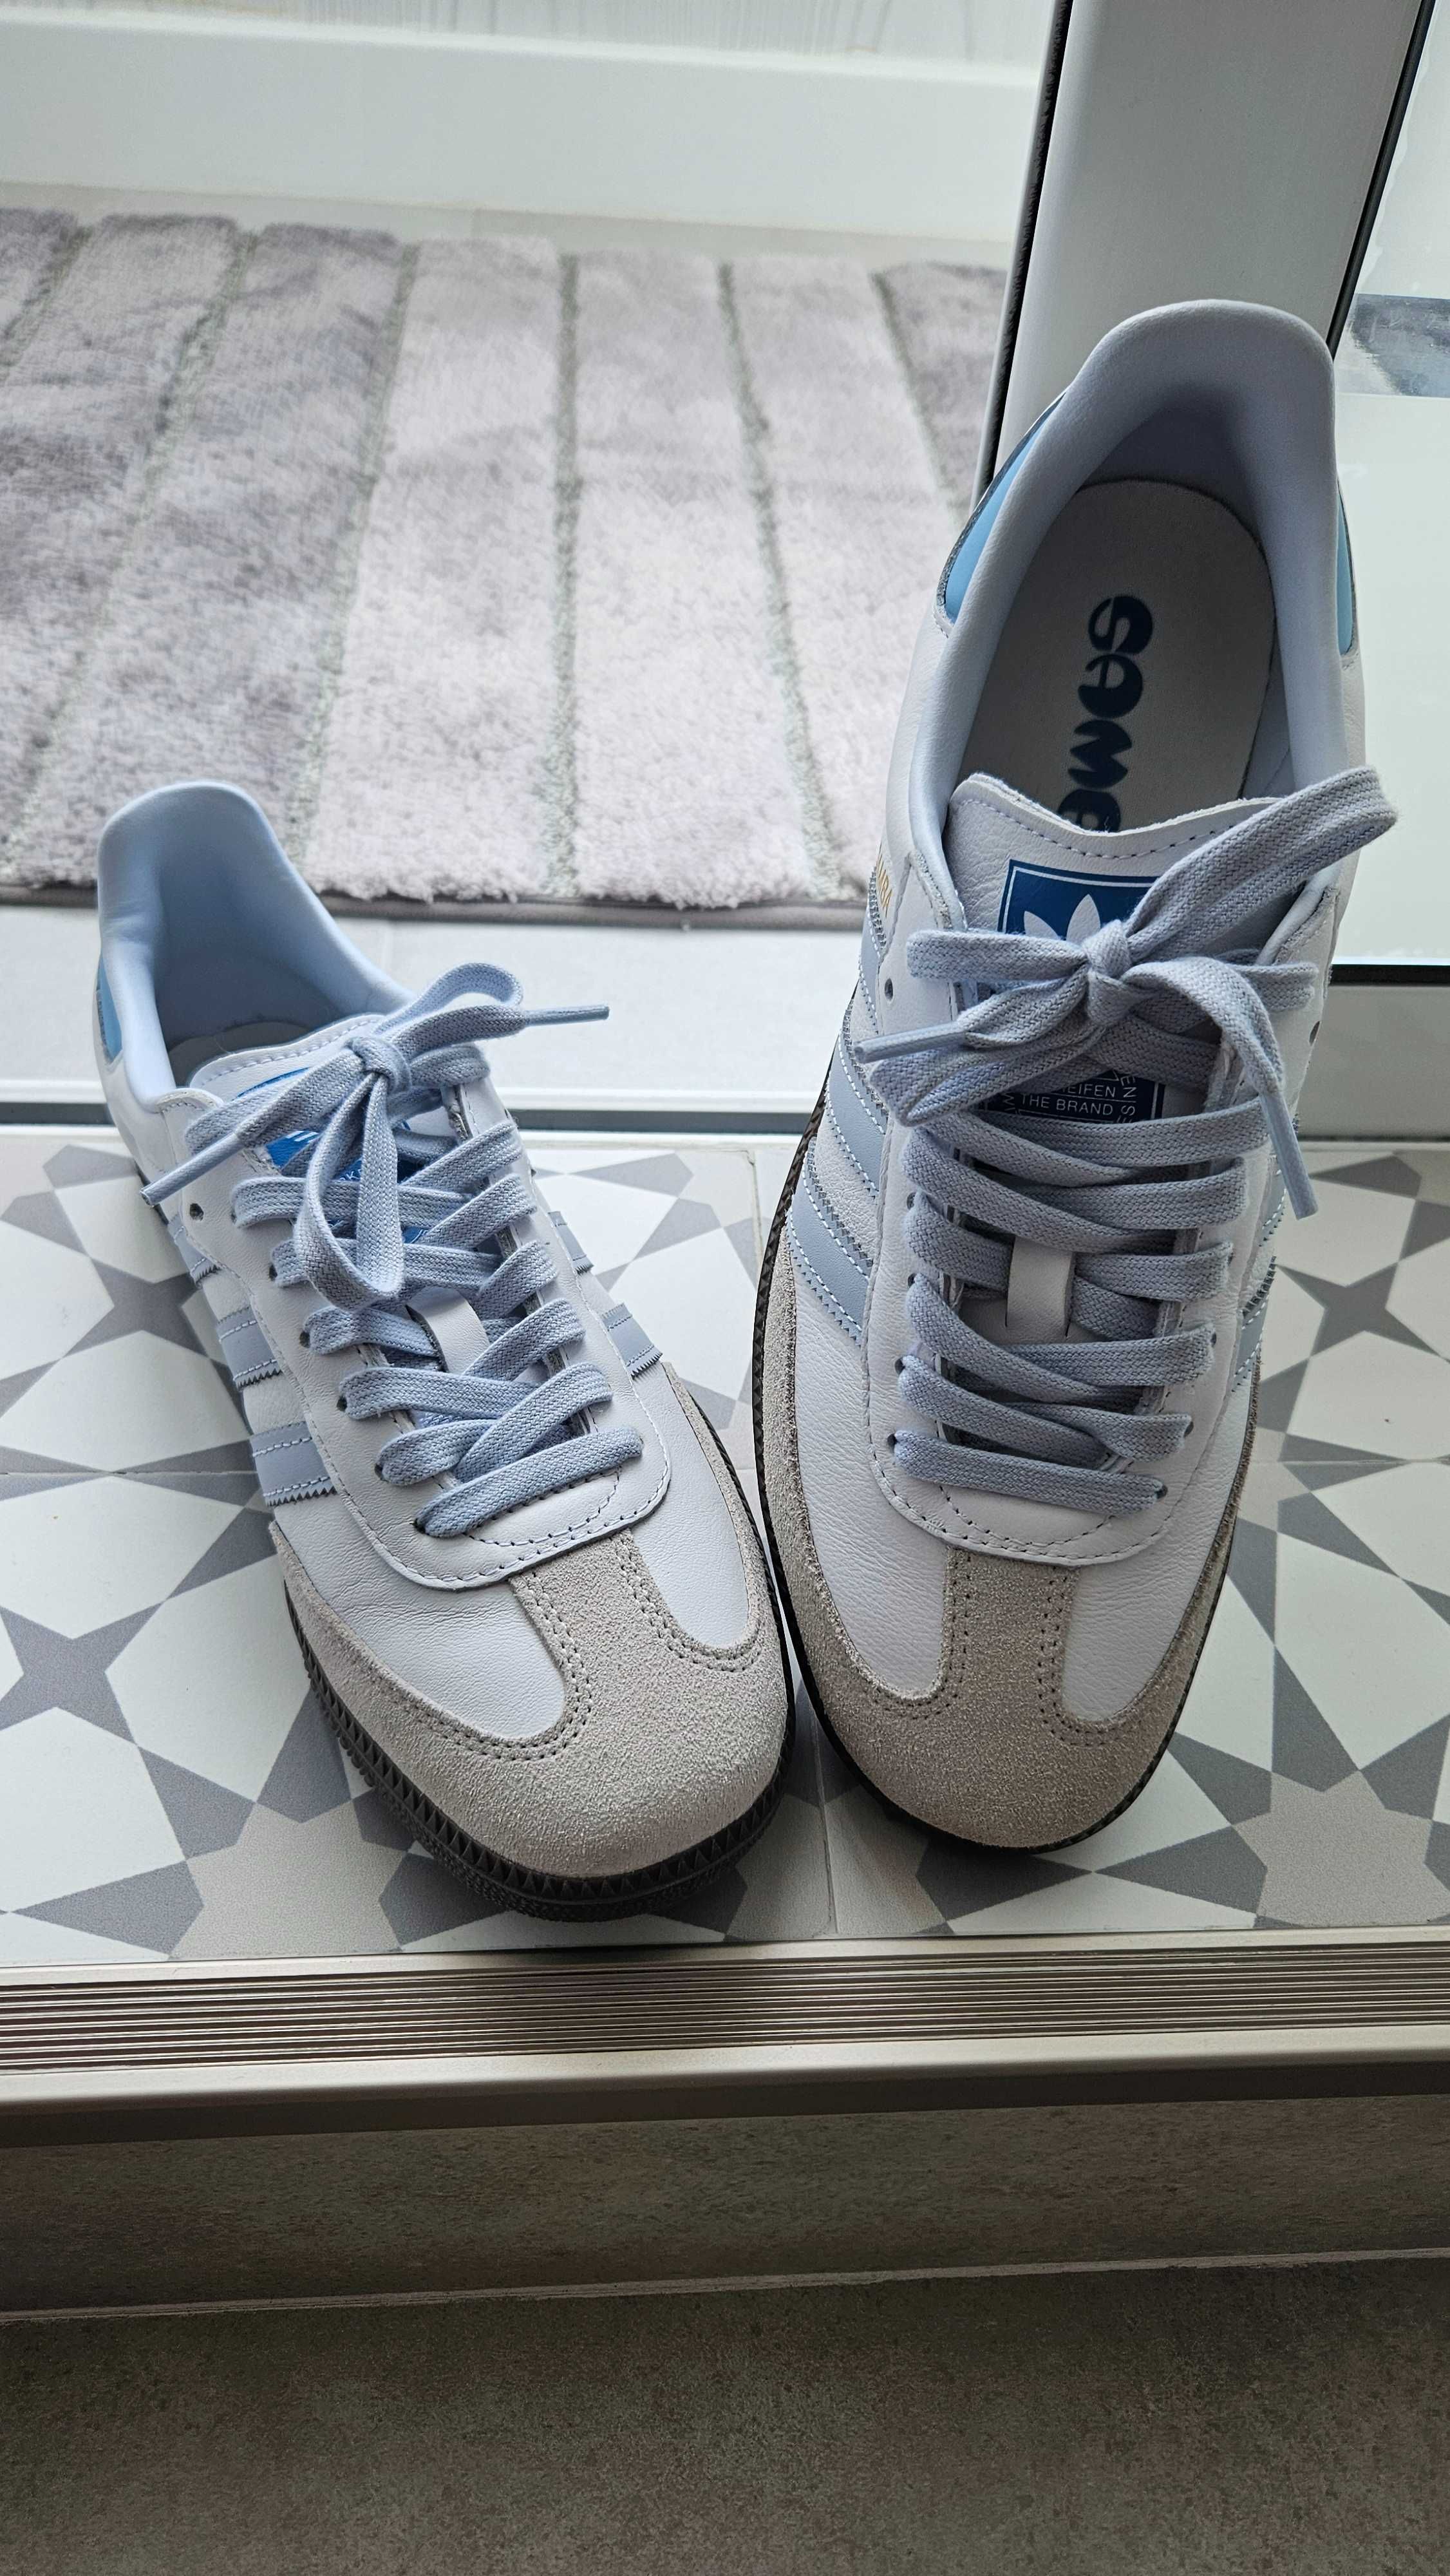 Adidas Samba (alb cu dungi albastre) și